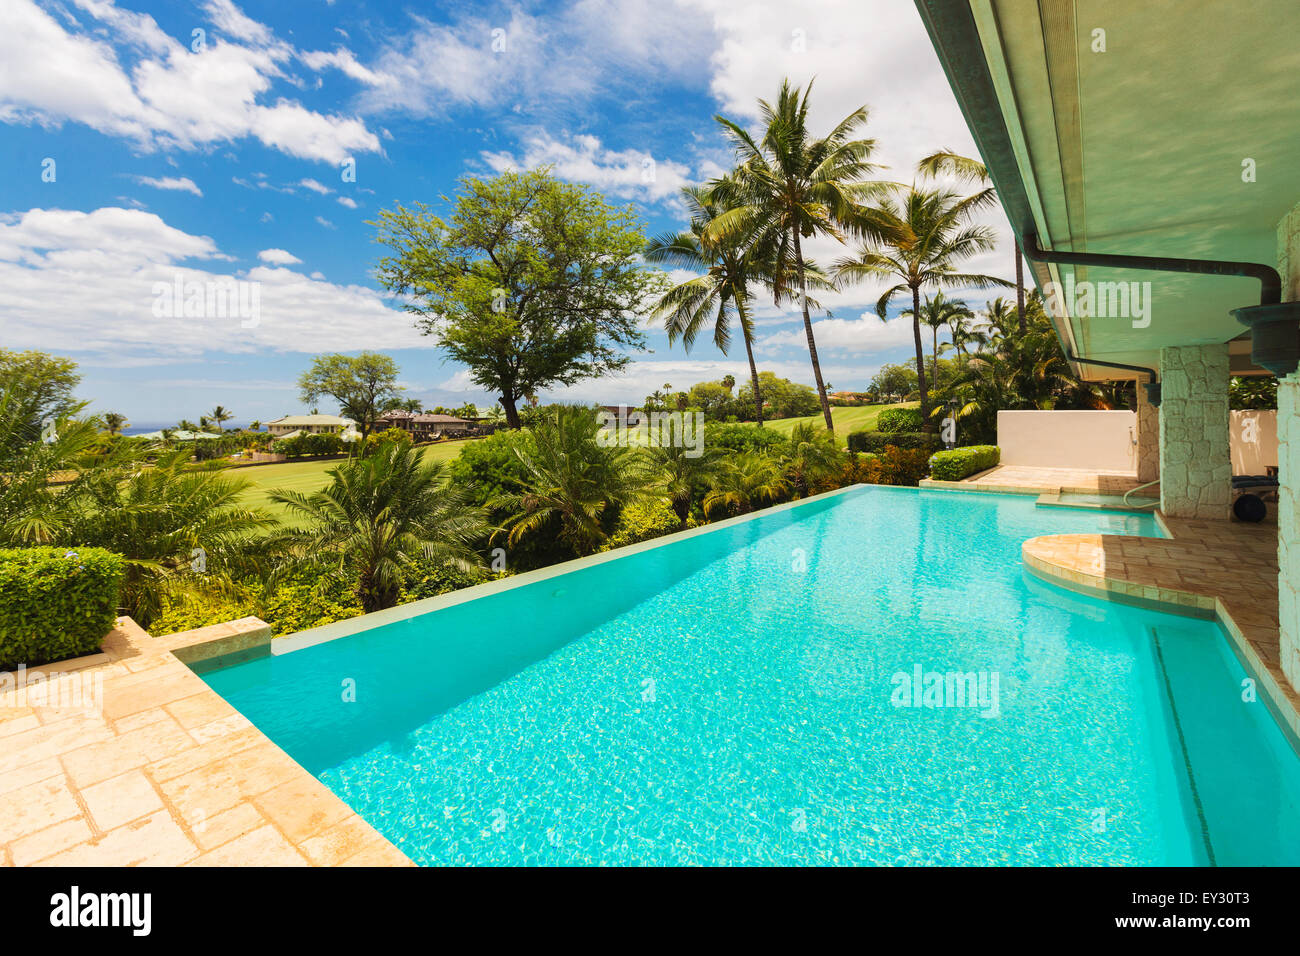 Beautiful Luxury Home with Swimming Pool Stock Photo